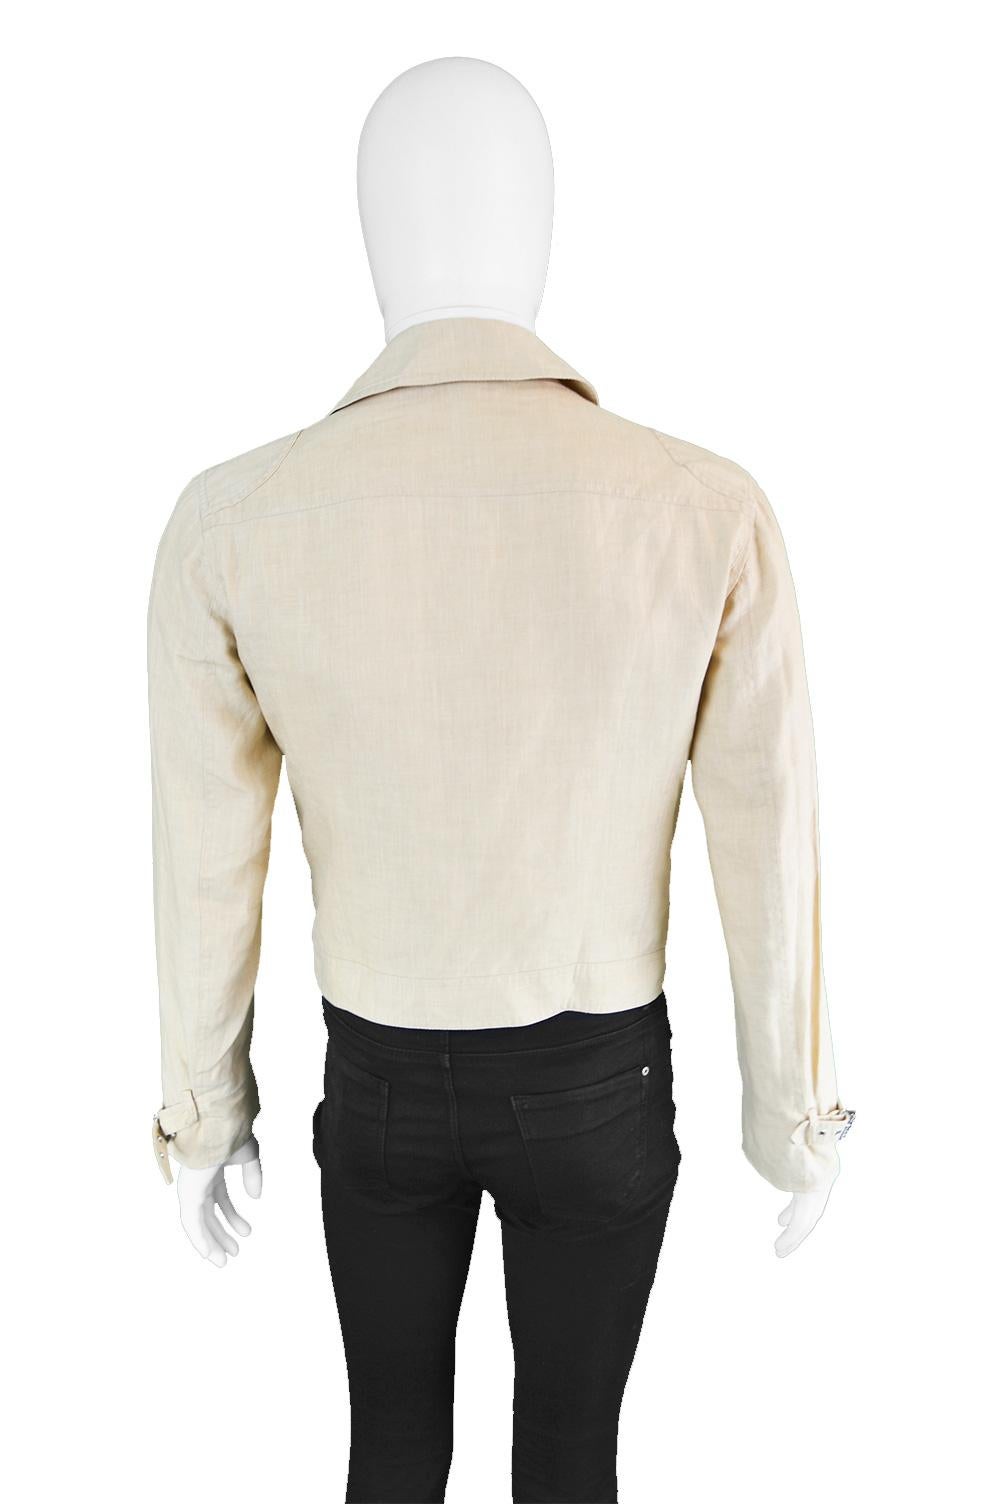 Gianni Versace Couture Pure Cream Linen Men's Unisex Jacket, S/S 2003 5